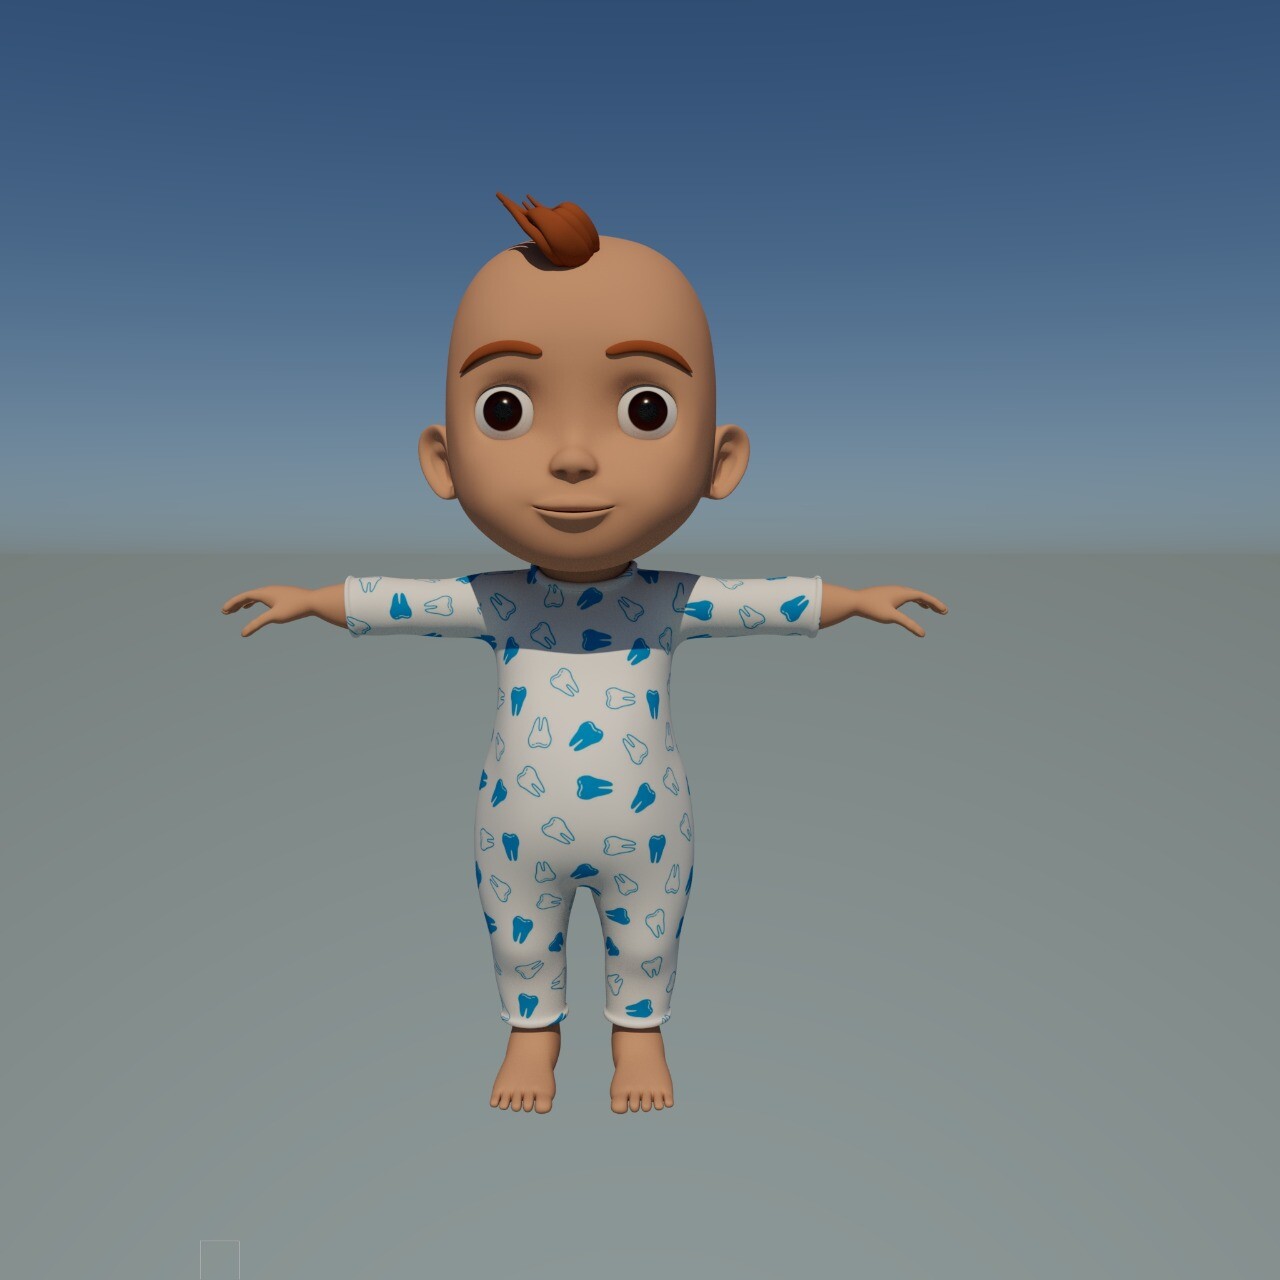 ArtStation - cartoon character chasma boy and baby boy